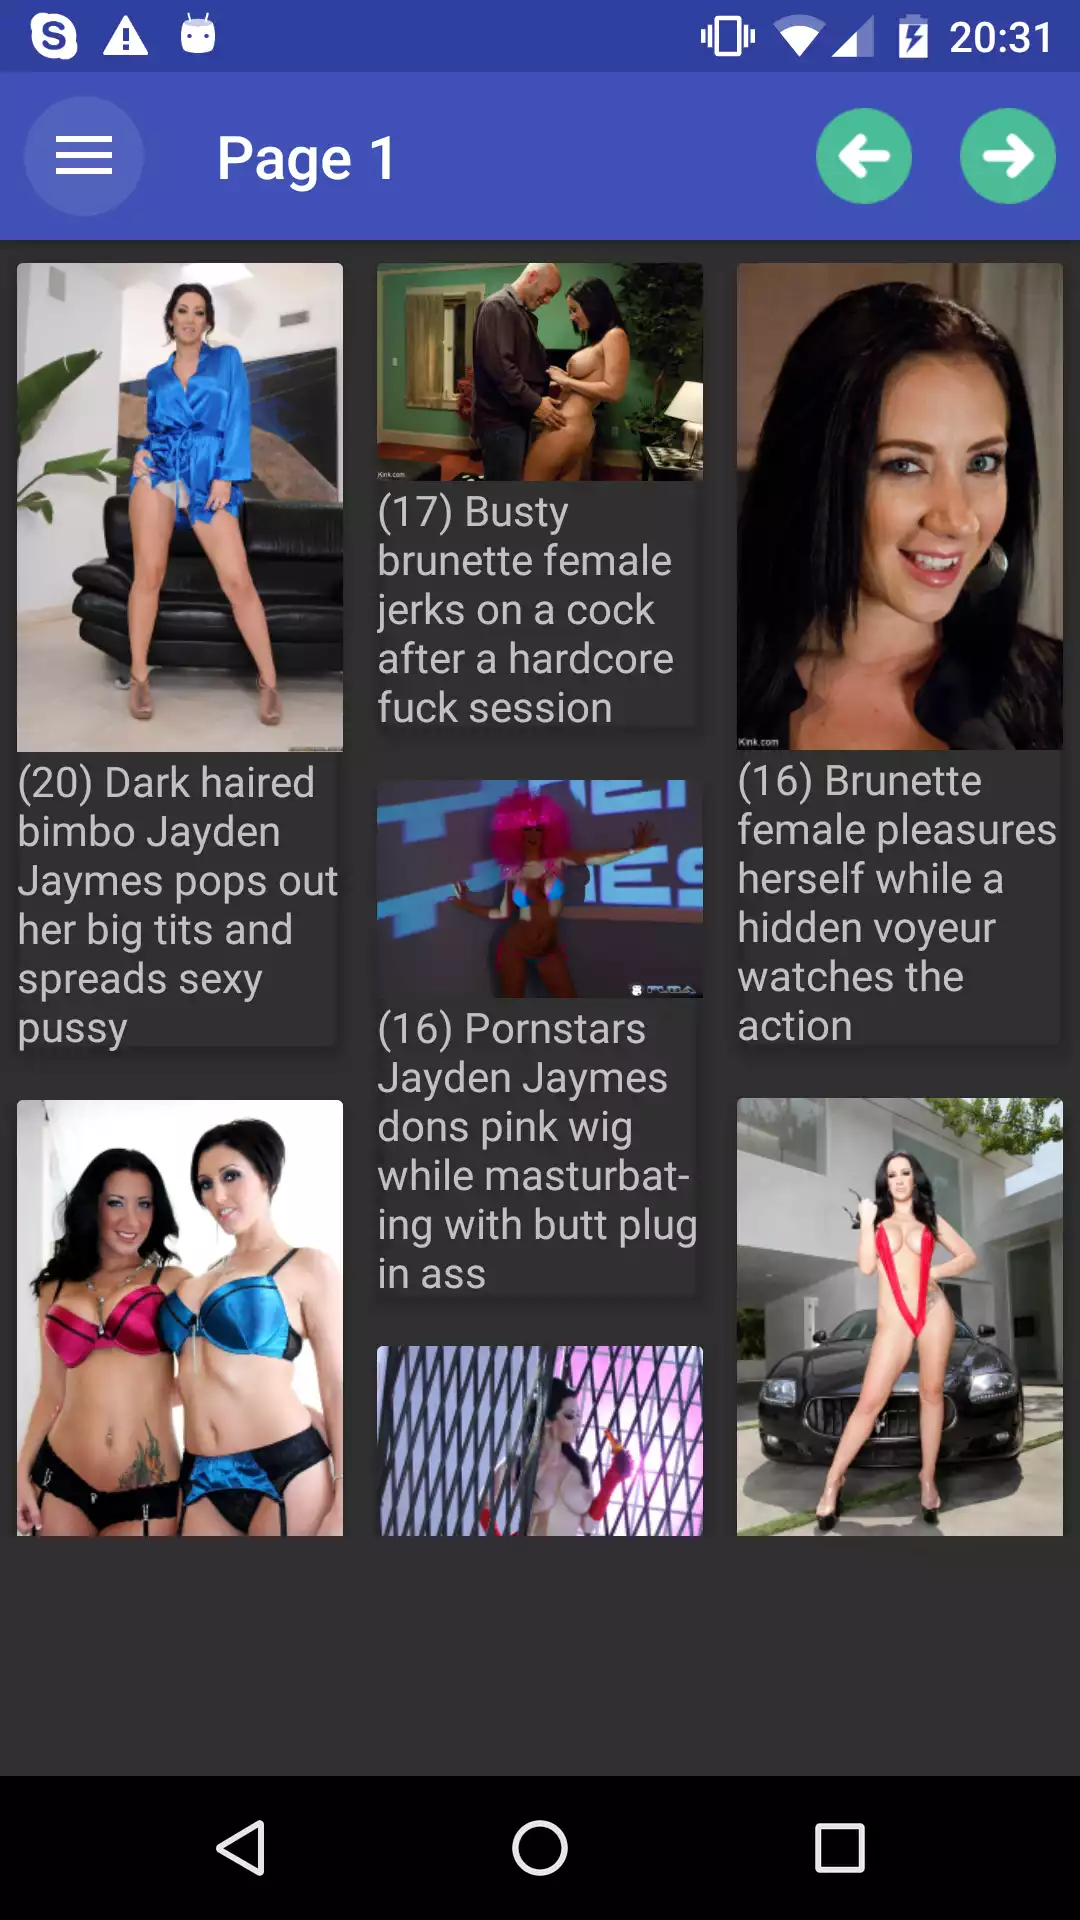 Jayden Jaymes porn,apk,shemales,galleries,hentaipics,aplikasi,pics,picks,adult,sexy,for,lisa,anoko,wallpapers,pornstars,hotebonypics,hentai,android,app,hotmilfpics,mainichi,hot